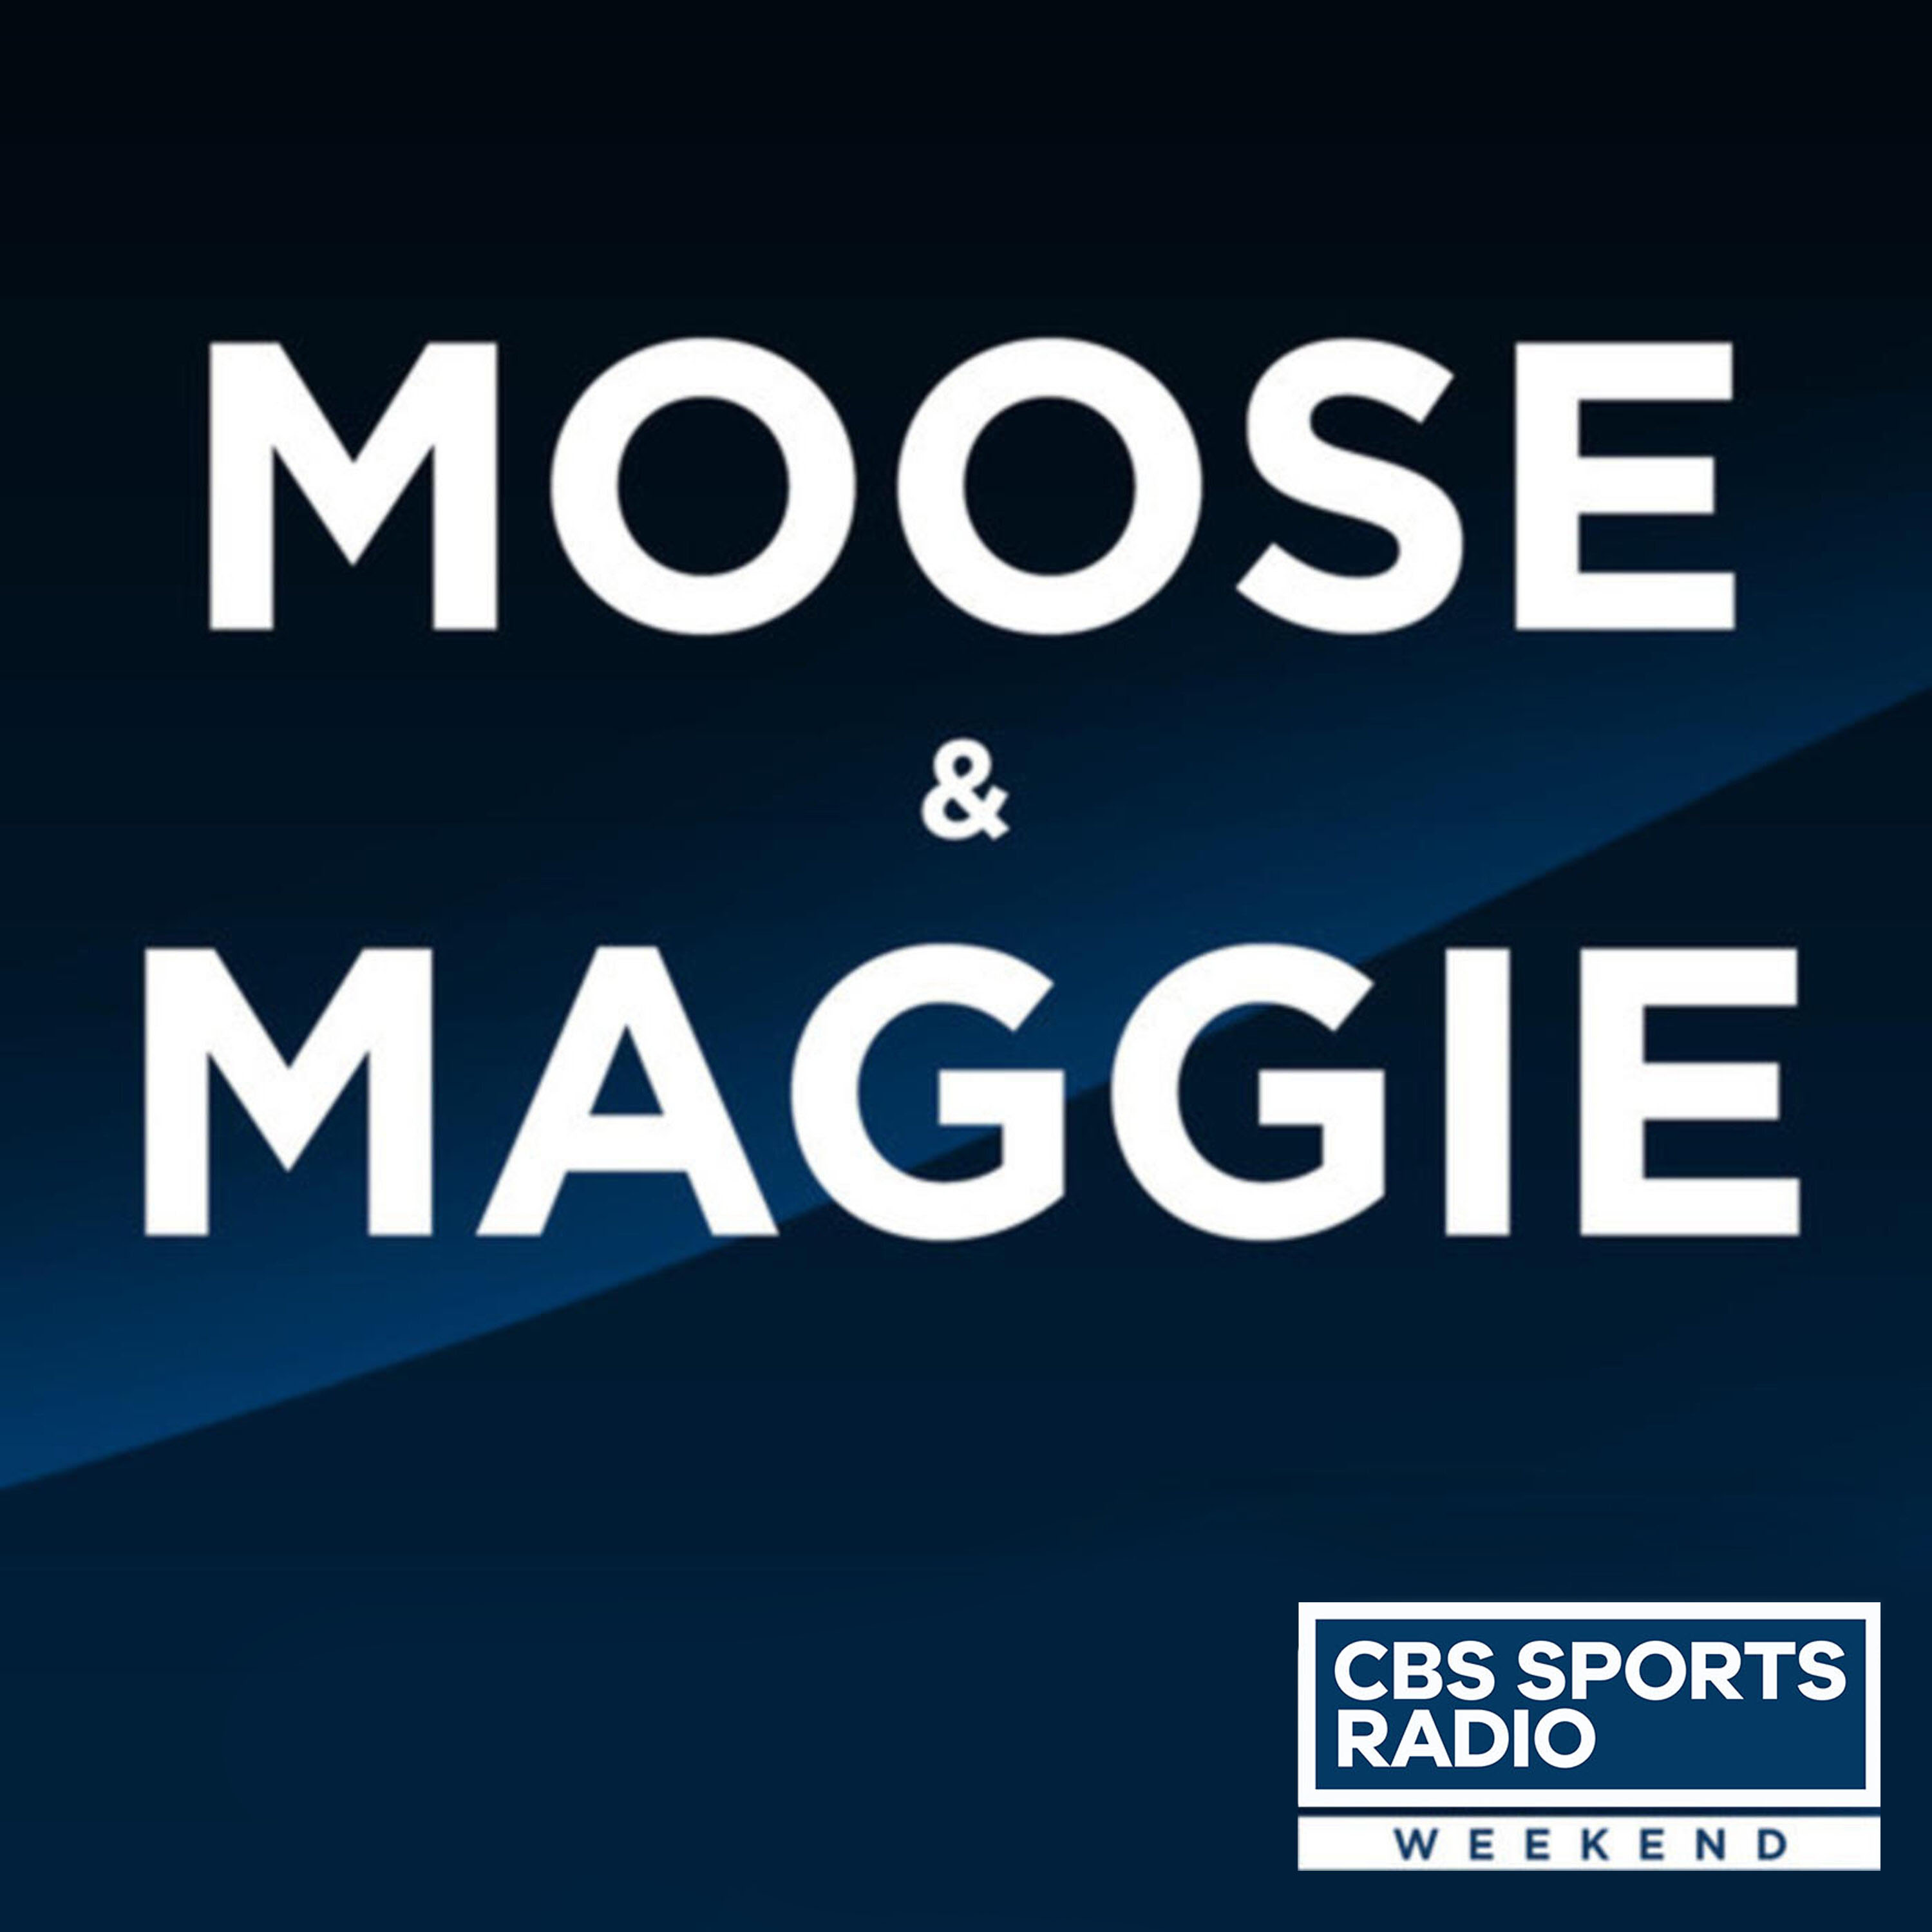 THE MOOSE & MAGGIE SHOW- PHIL SAVAGE, CRIMSON TIDE RADIO ANALYST